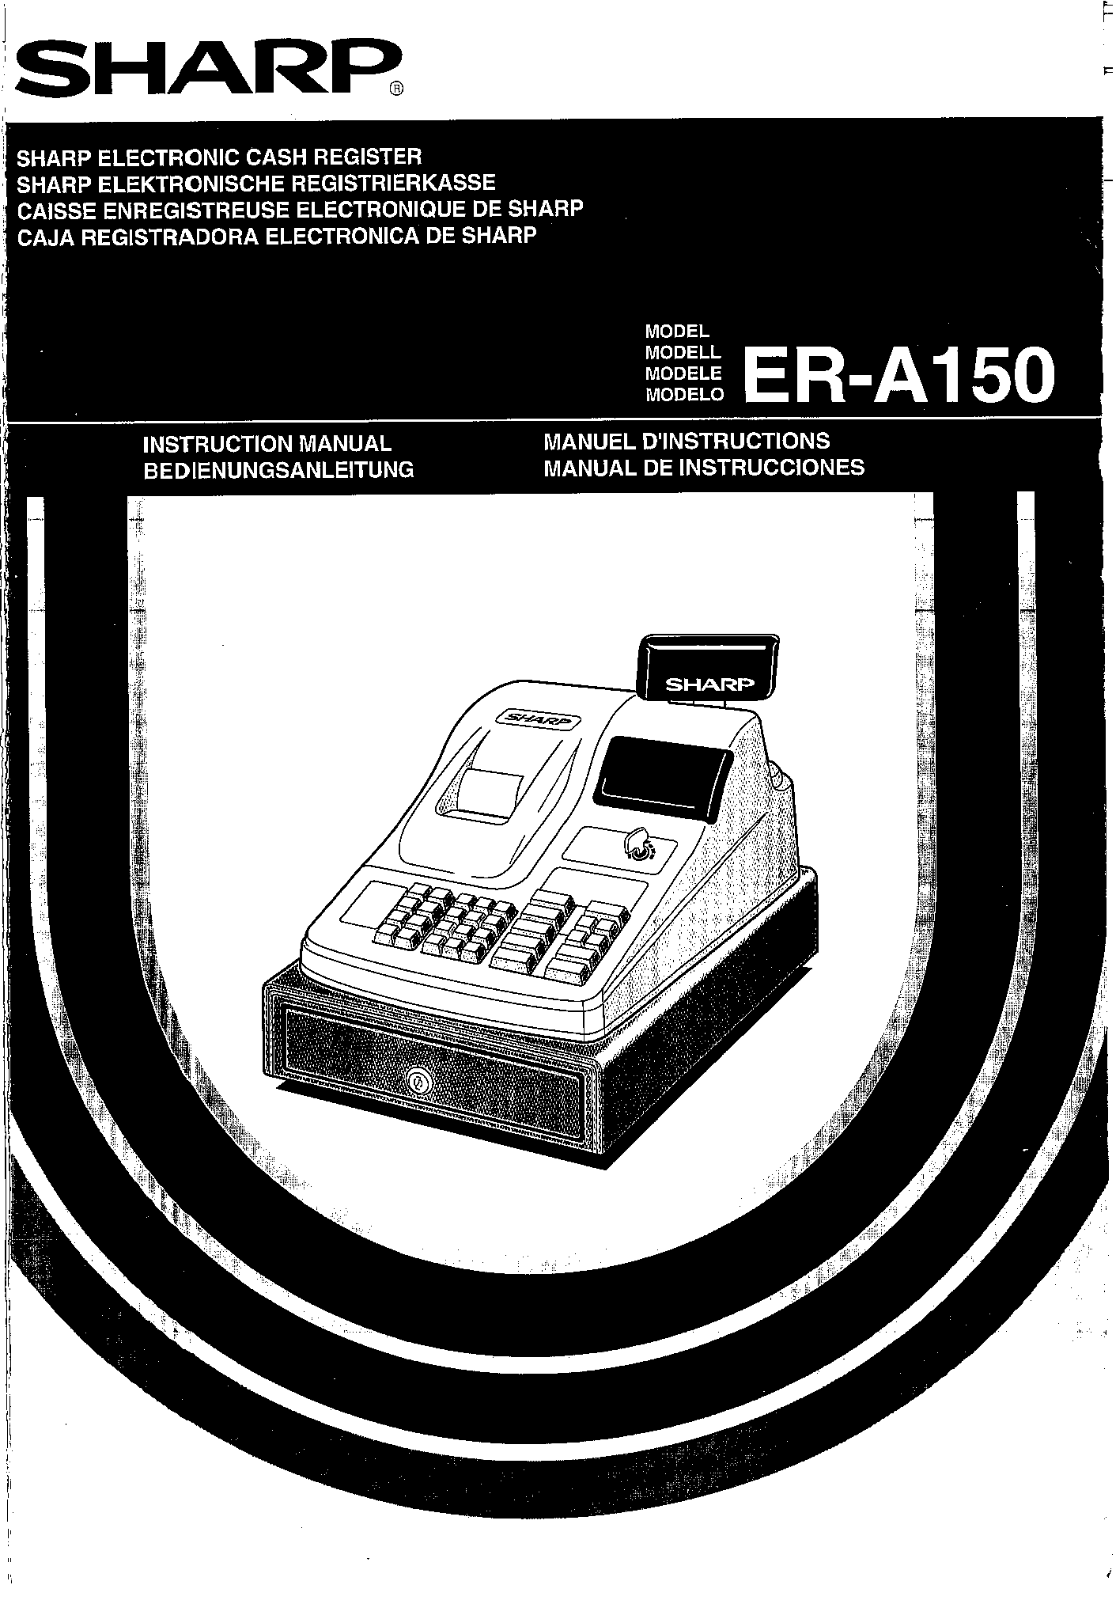 Sharp ER-A150 User Manual